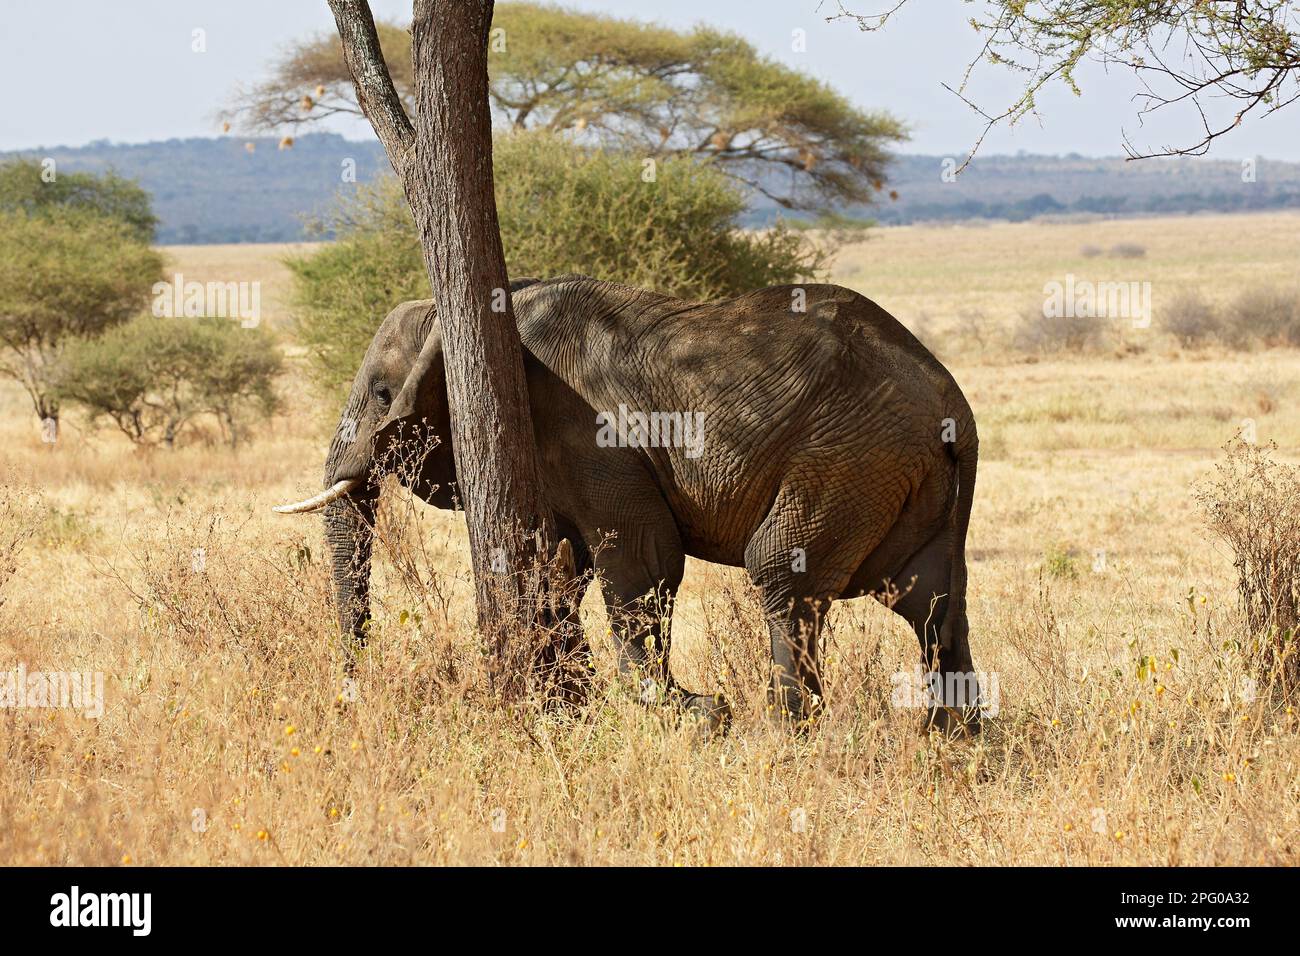 African elephant (Loxodonta africana) rubbing itself, Tarangire National Park, Tanzania Stock Photo